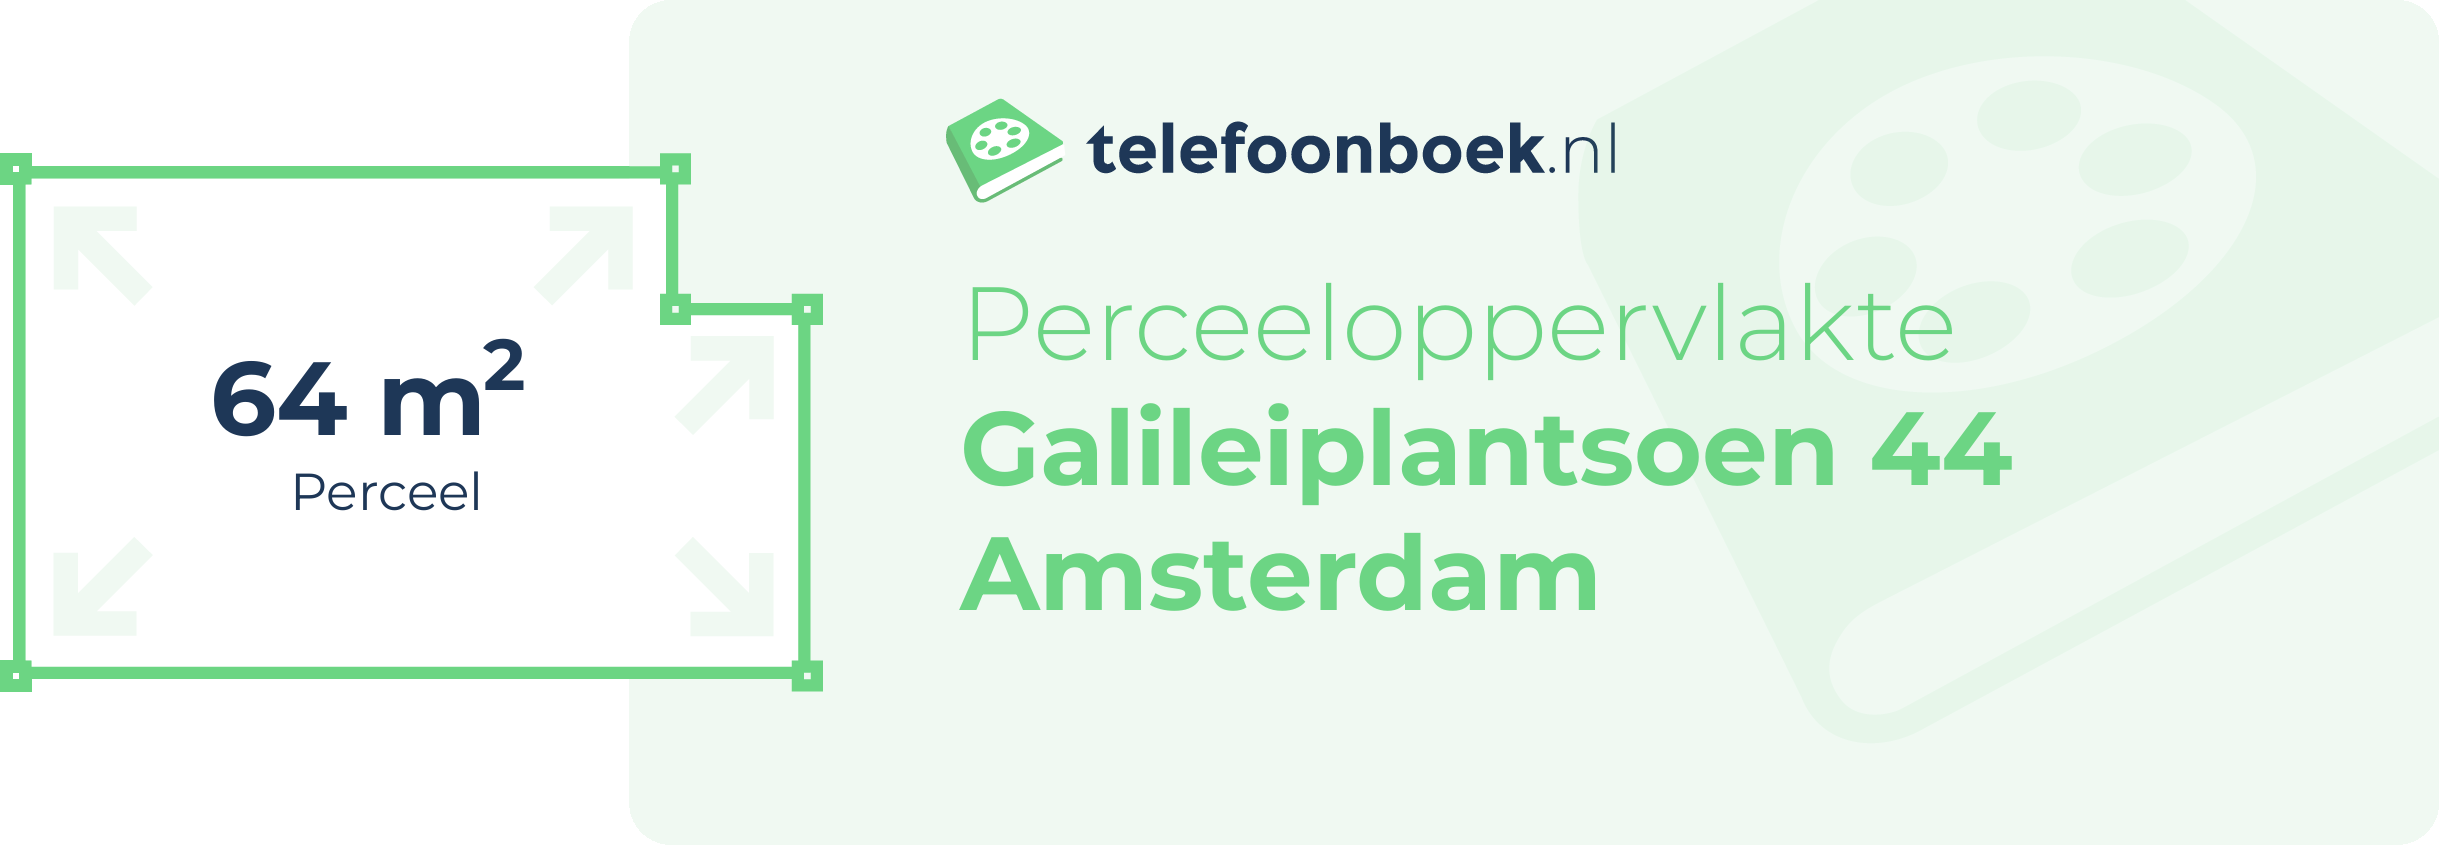 Perceeloppervlakte Galileiplantsoen 44 Amsterdam